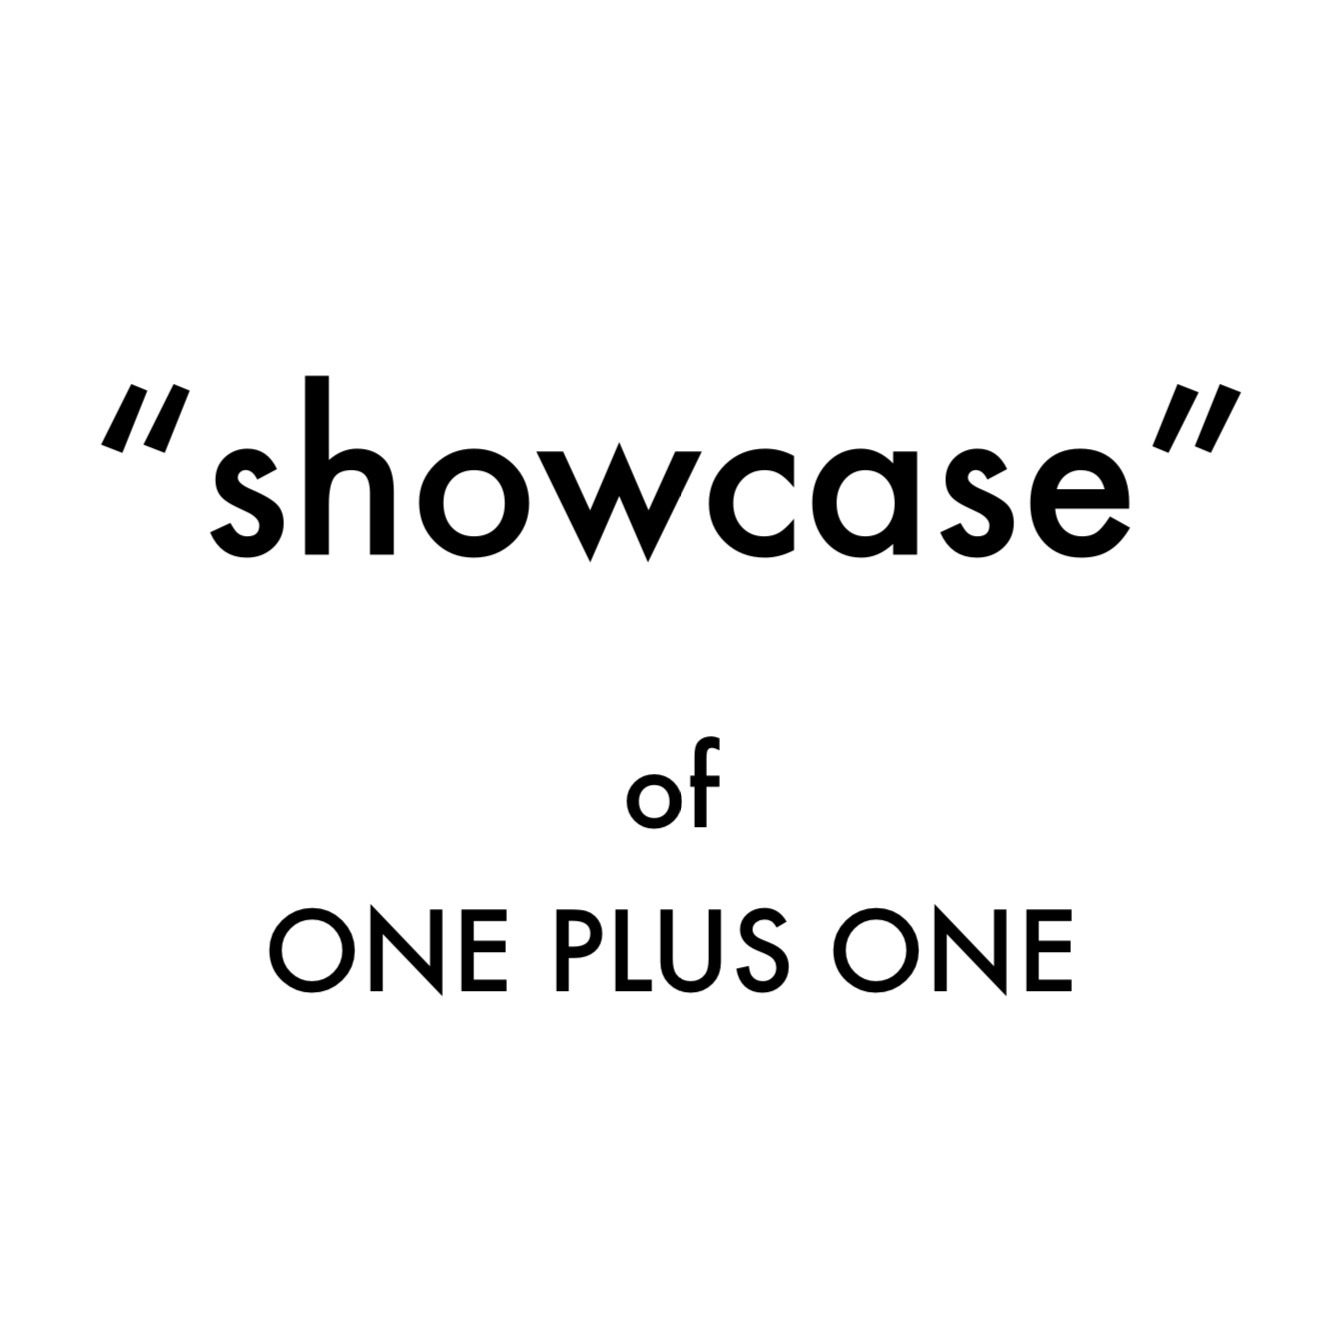 “showcase” of ONE PLUS ONE